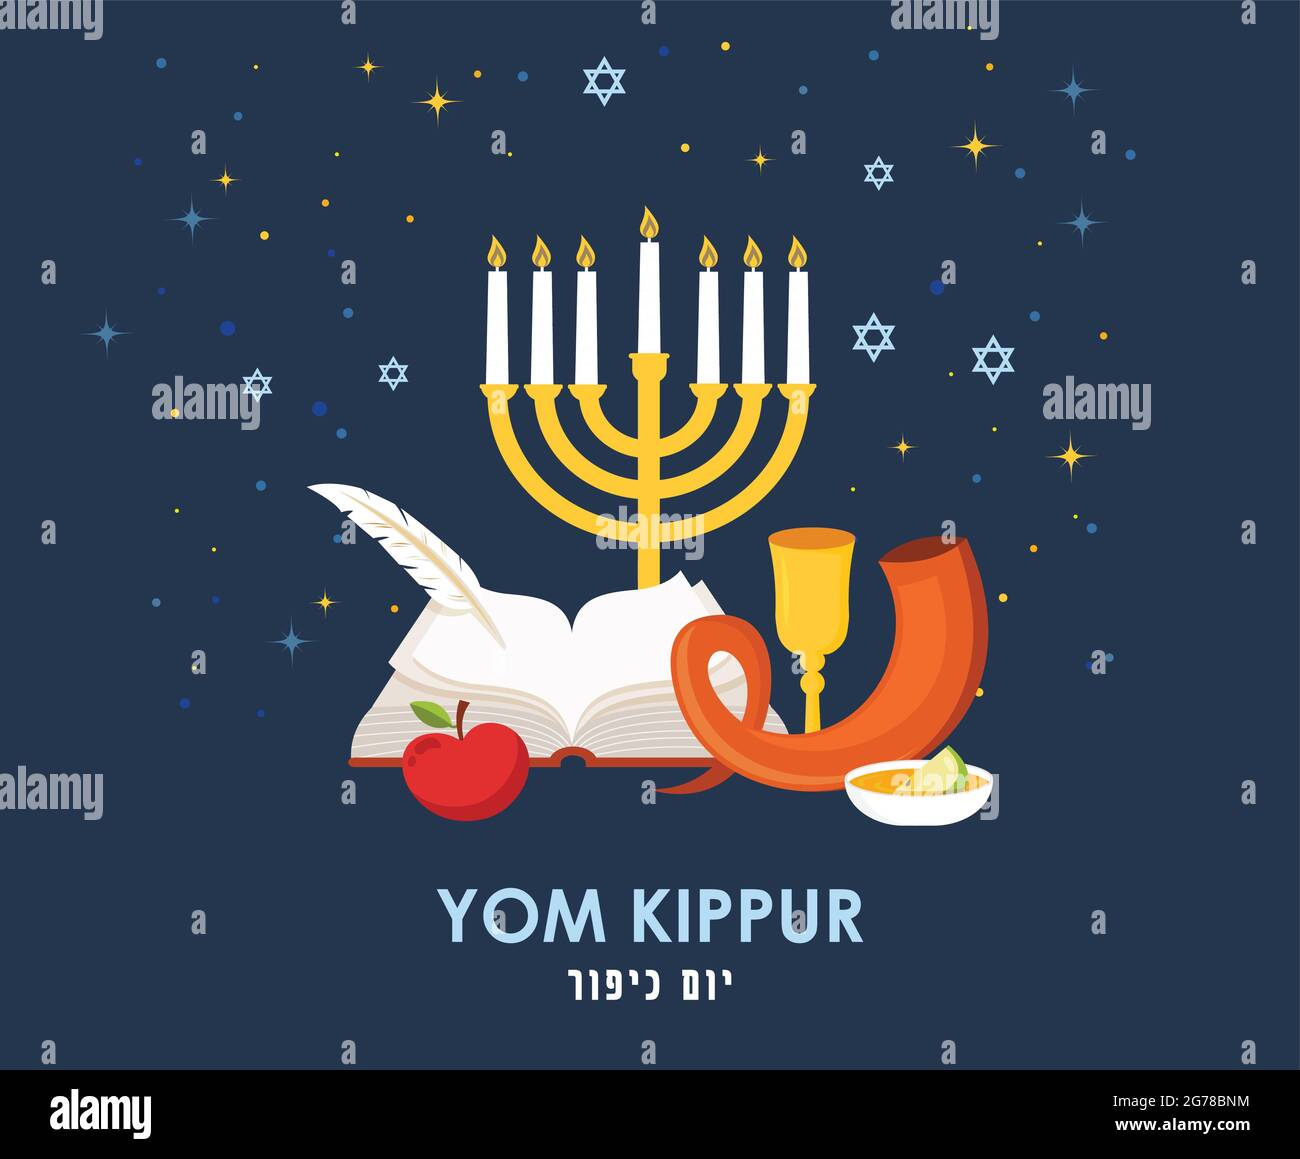 Greeting card for Jewish holiday Yom Kippur and jewish New Year, rosh hashanah, with traditional icons. Yom Kippur in hebrew. pattern with traditional Stock Vector